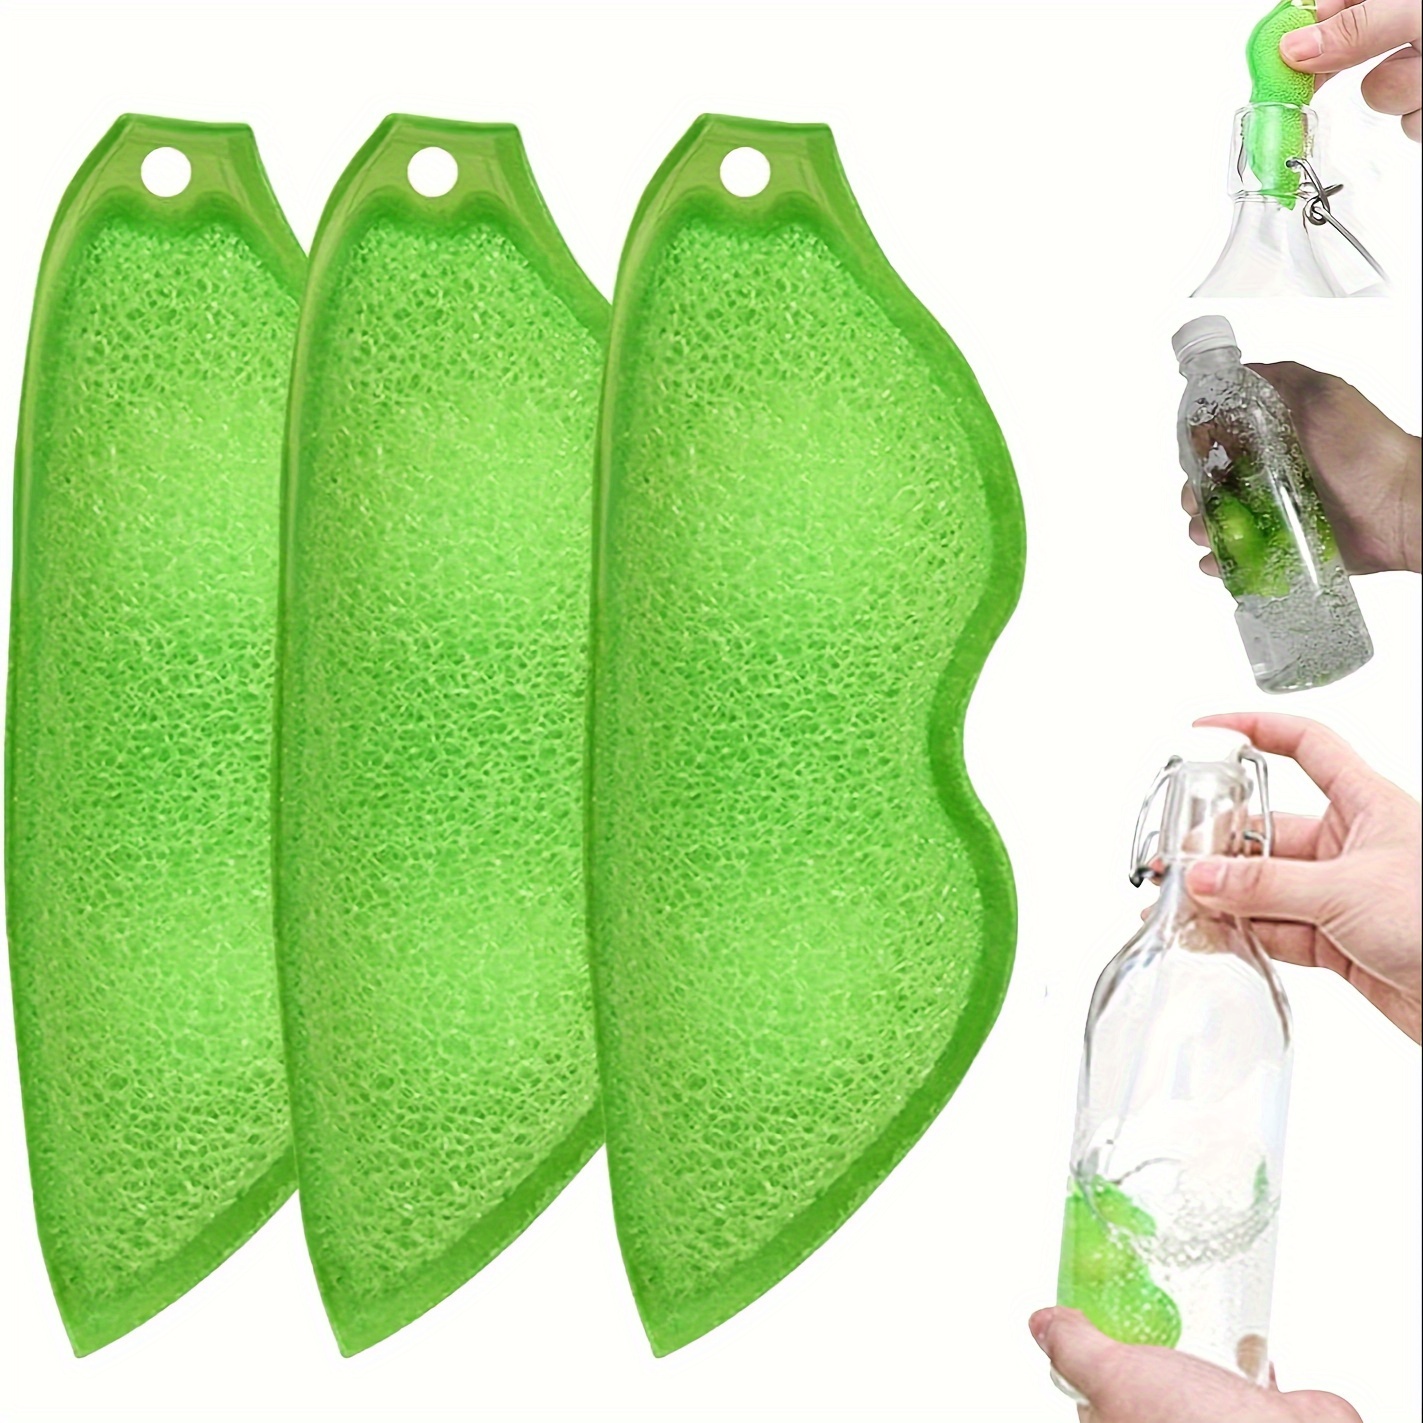 Magic Beans Bottle Cleaner, Water Bottle Pea Pod Cleaner, Reuseable Bean Bottle Cleaning Sponge, Heat Resistance Bottle Sponge for Internal Cleaning